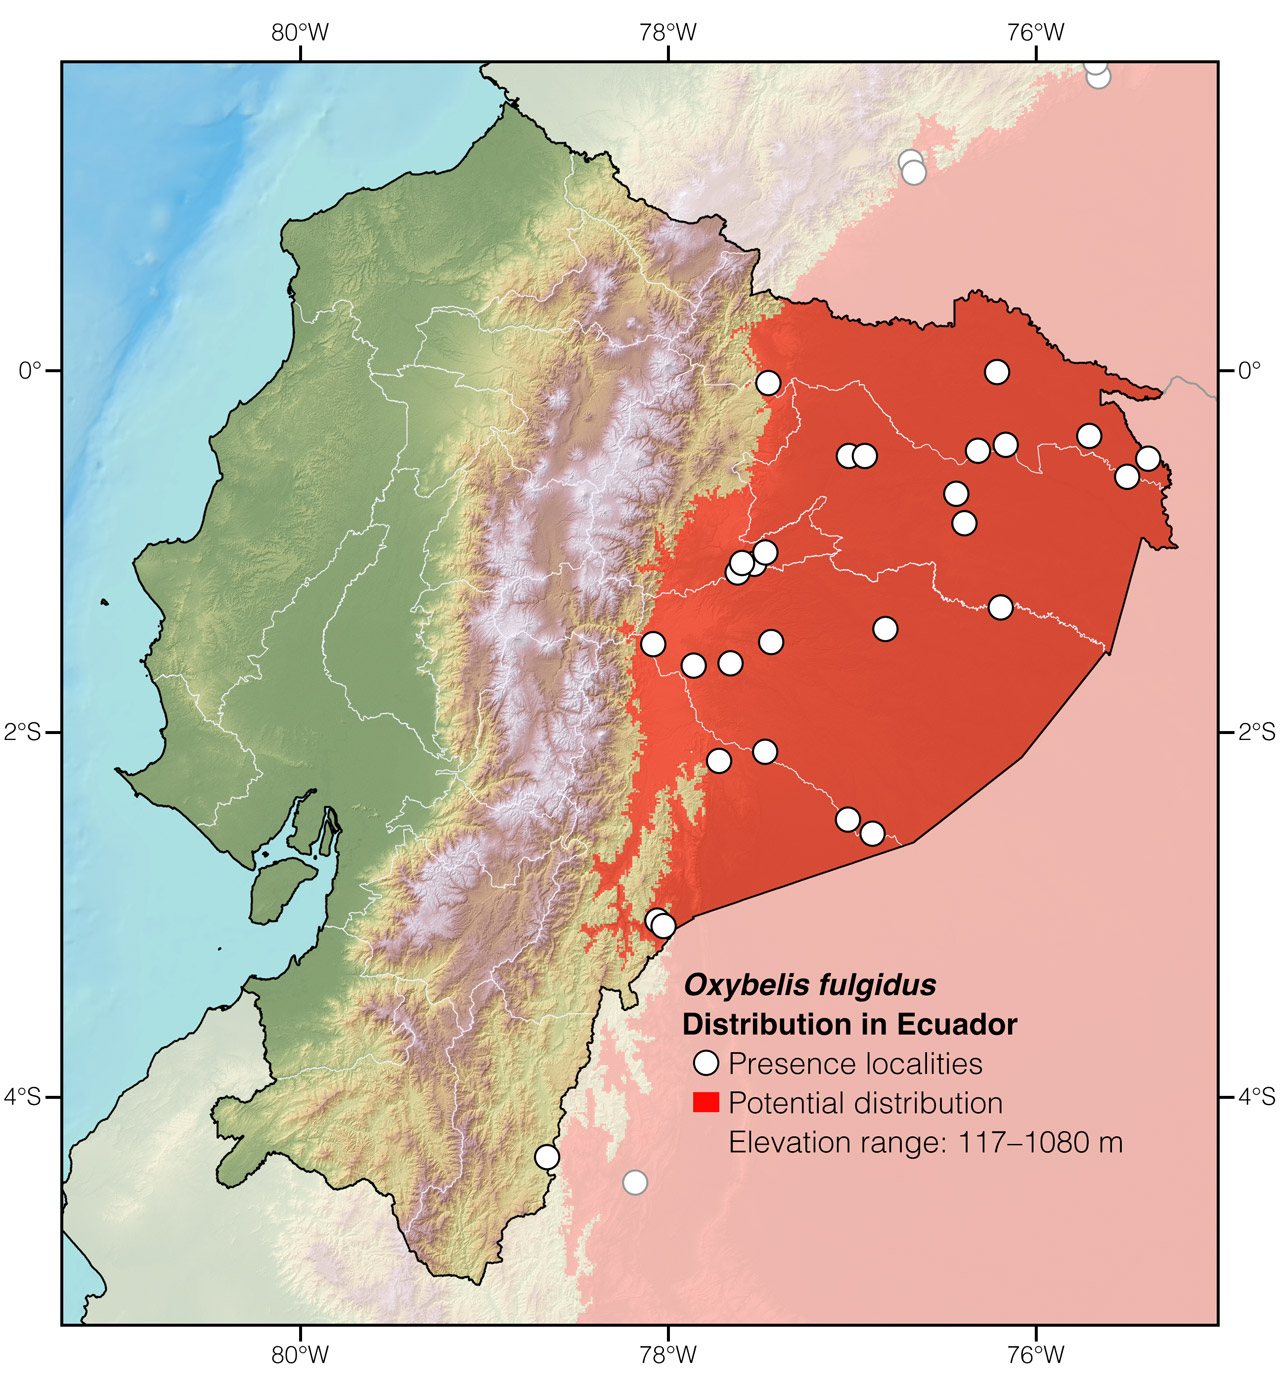 Distribution of Oxybelis fulgidus in Ecuador